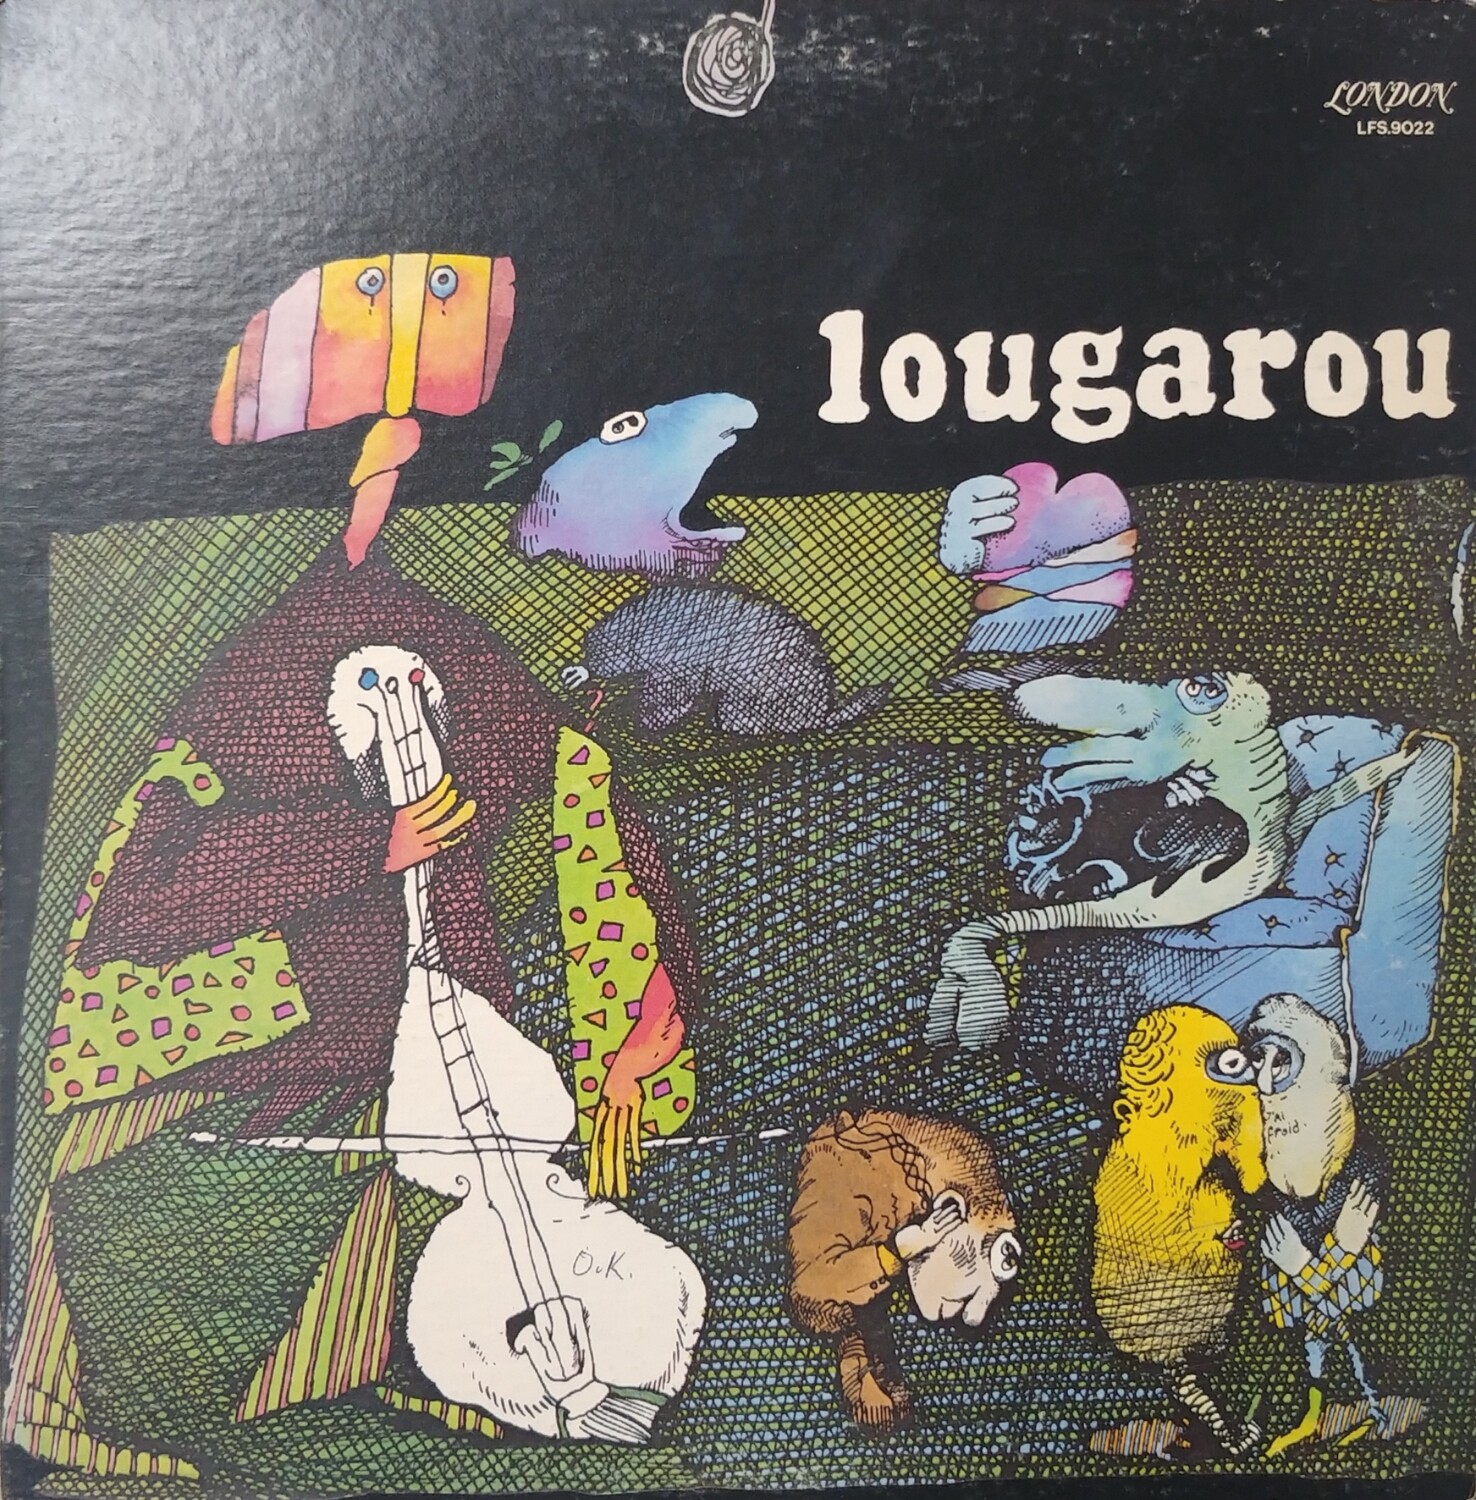 Lougarou - Lougarou (Garolou)